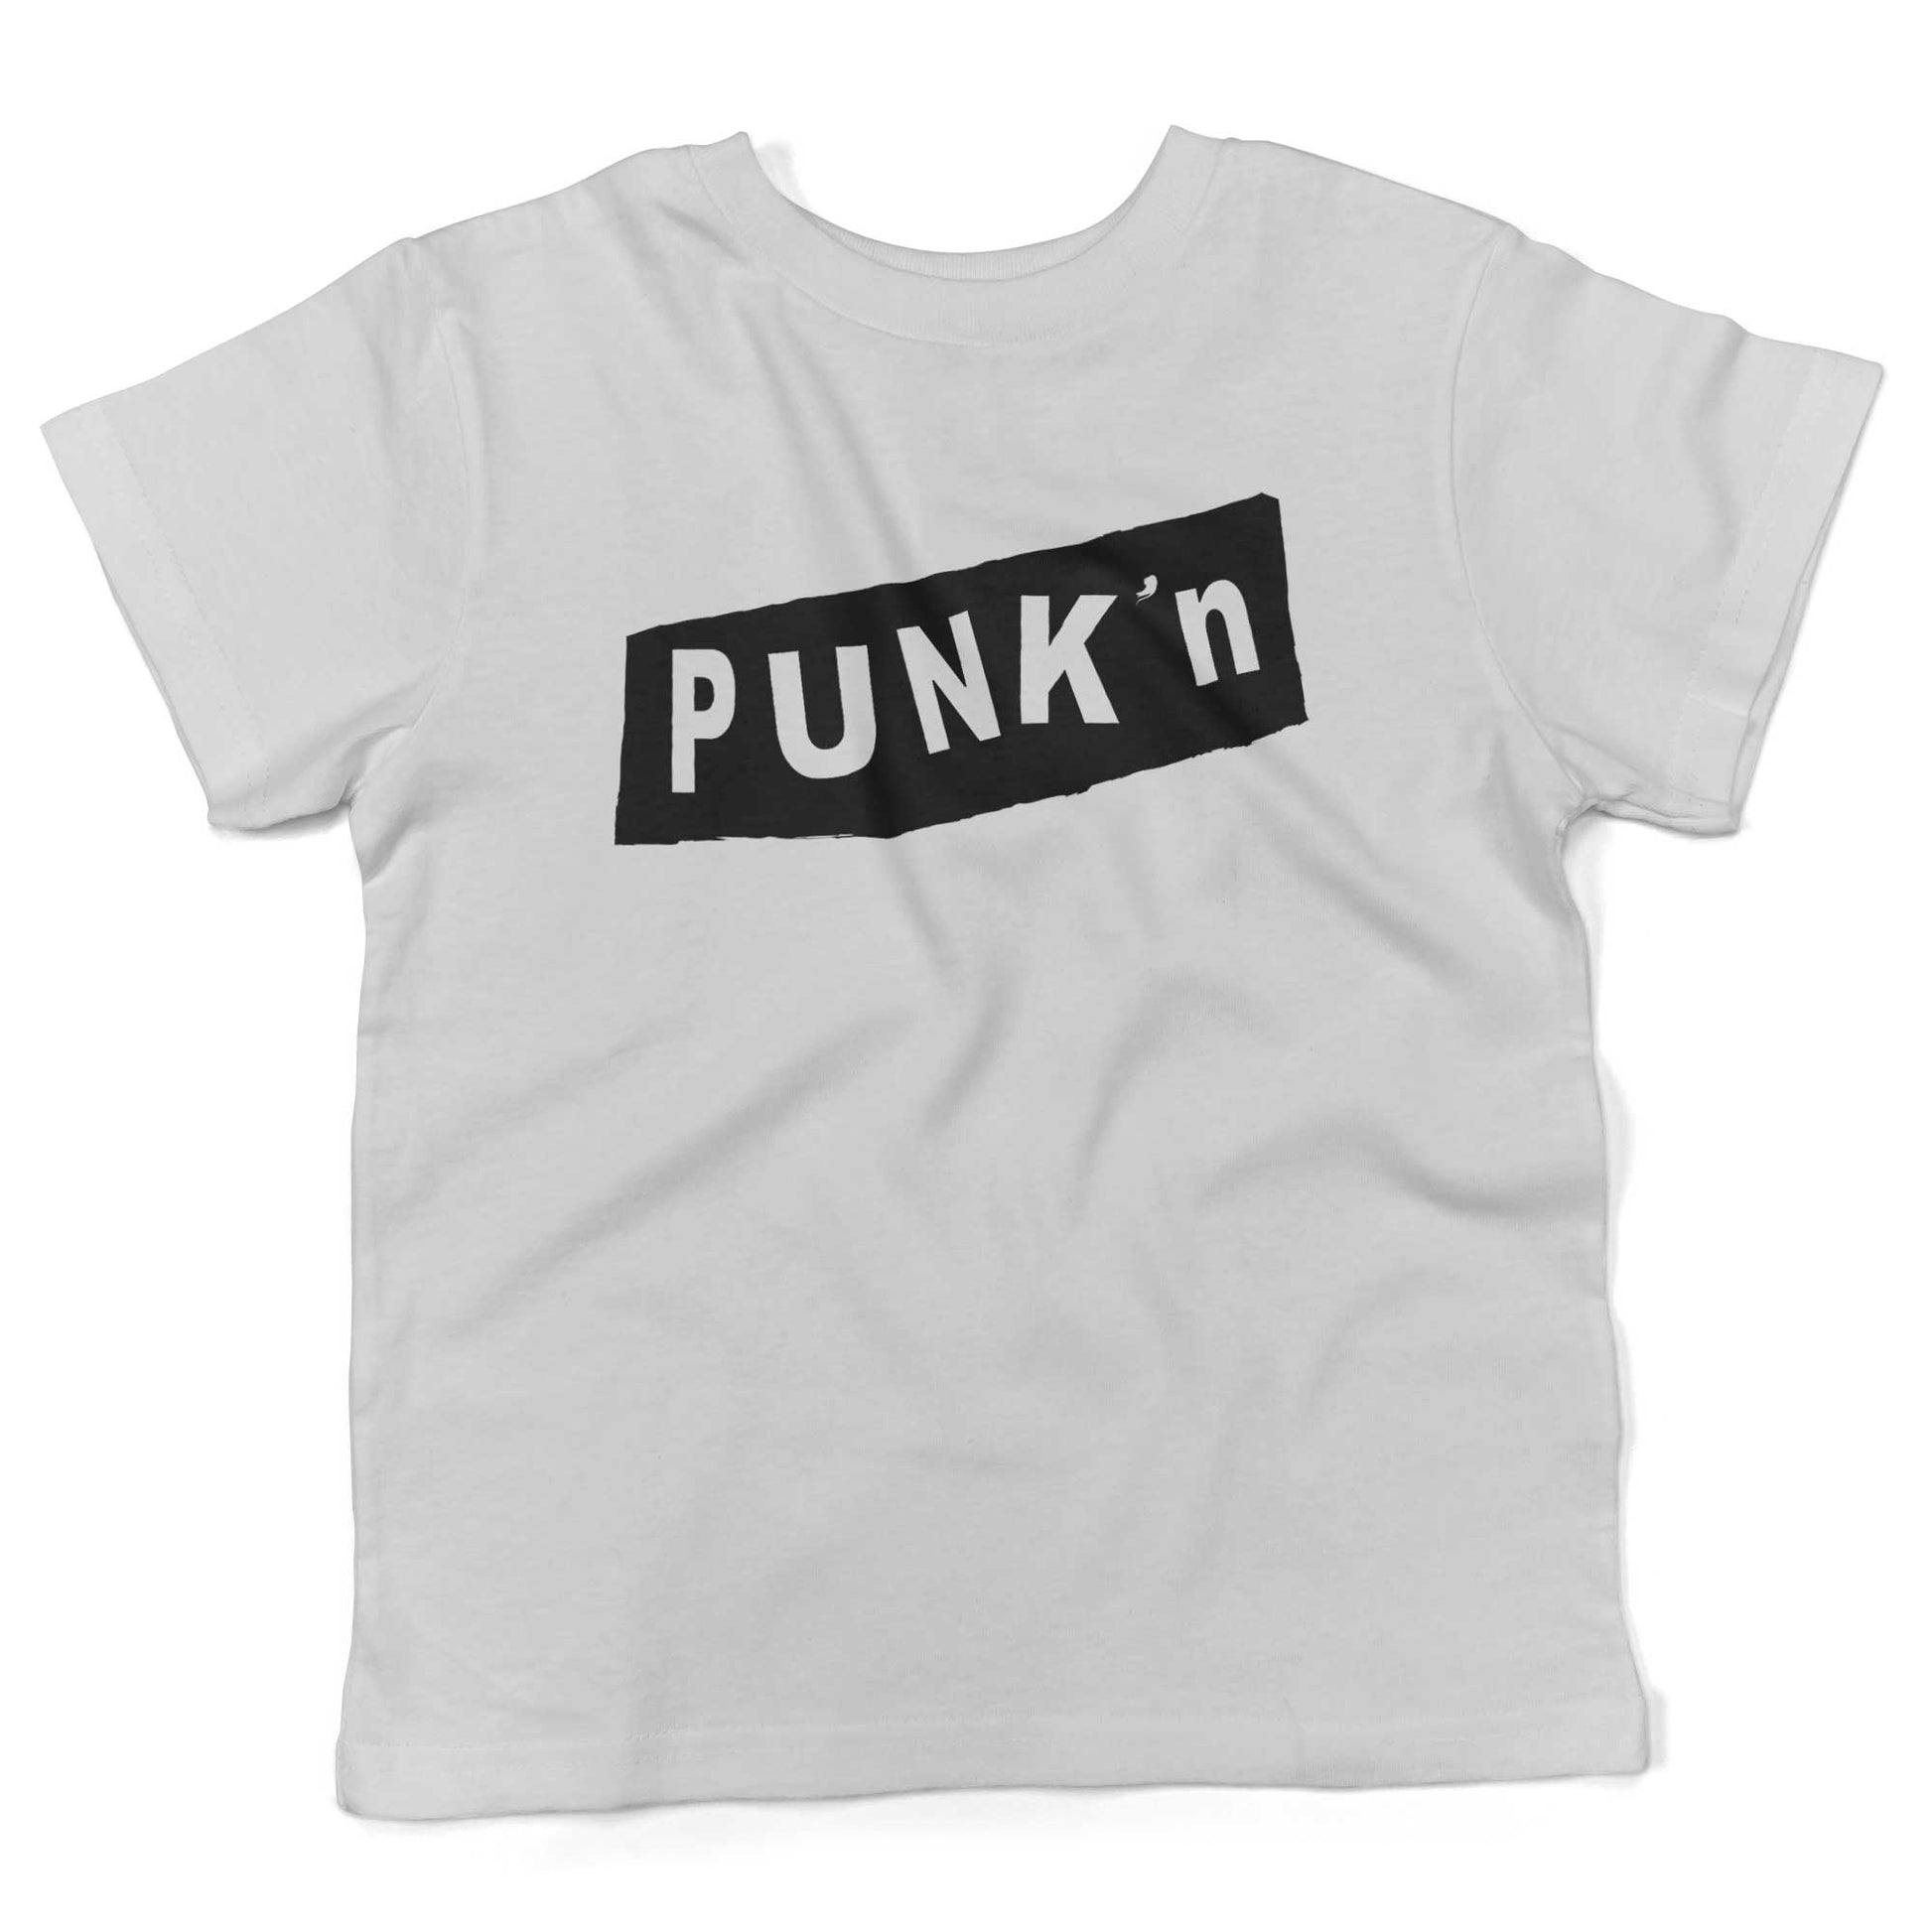 Pumpkin Punk'n Toddler Shirt-White-2T